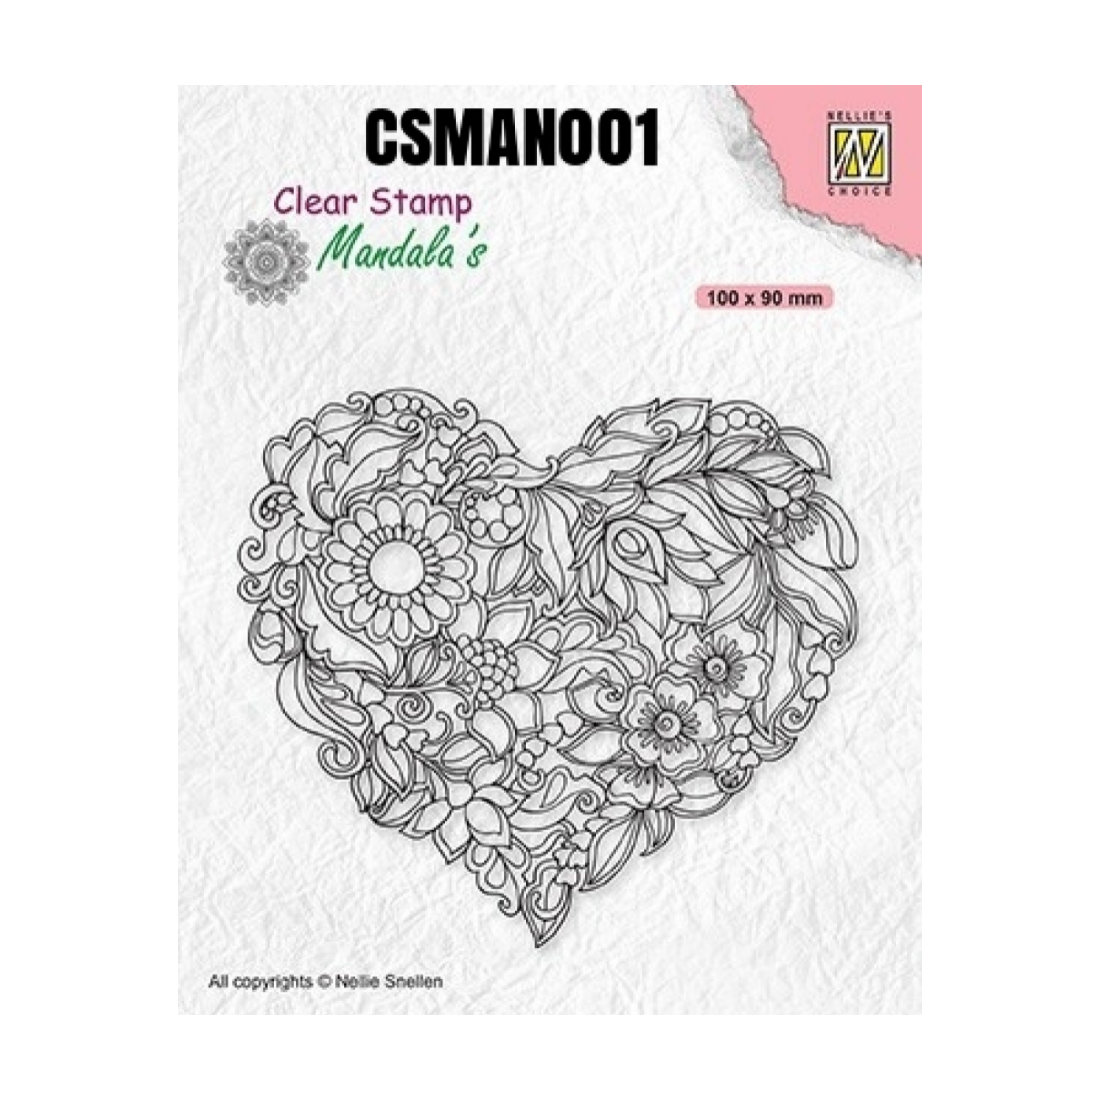 Carimbo Mandala Flower Heart CSMAN001 nellie`s choise